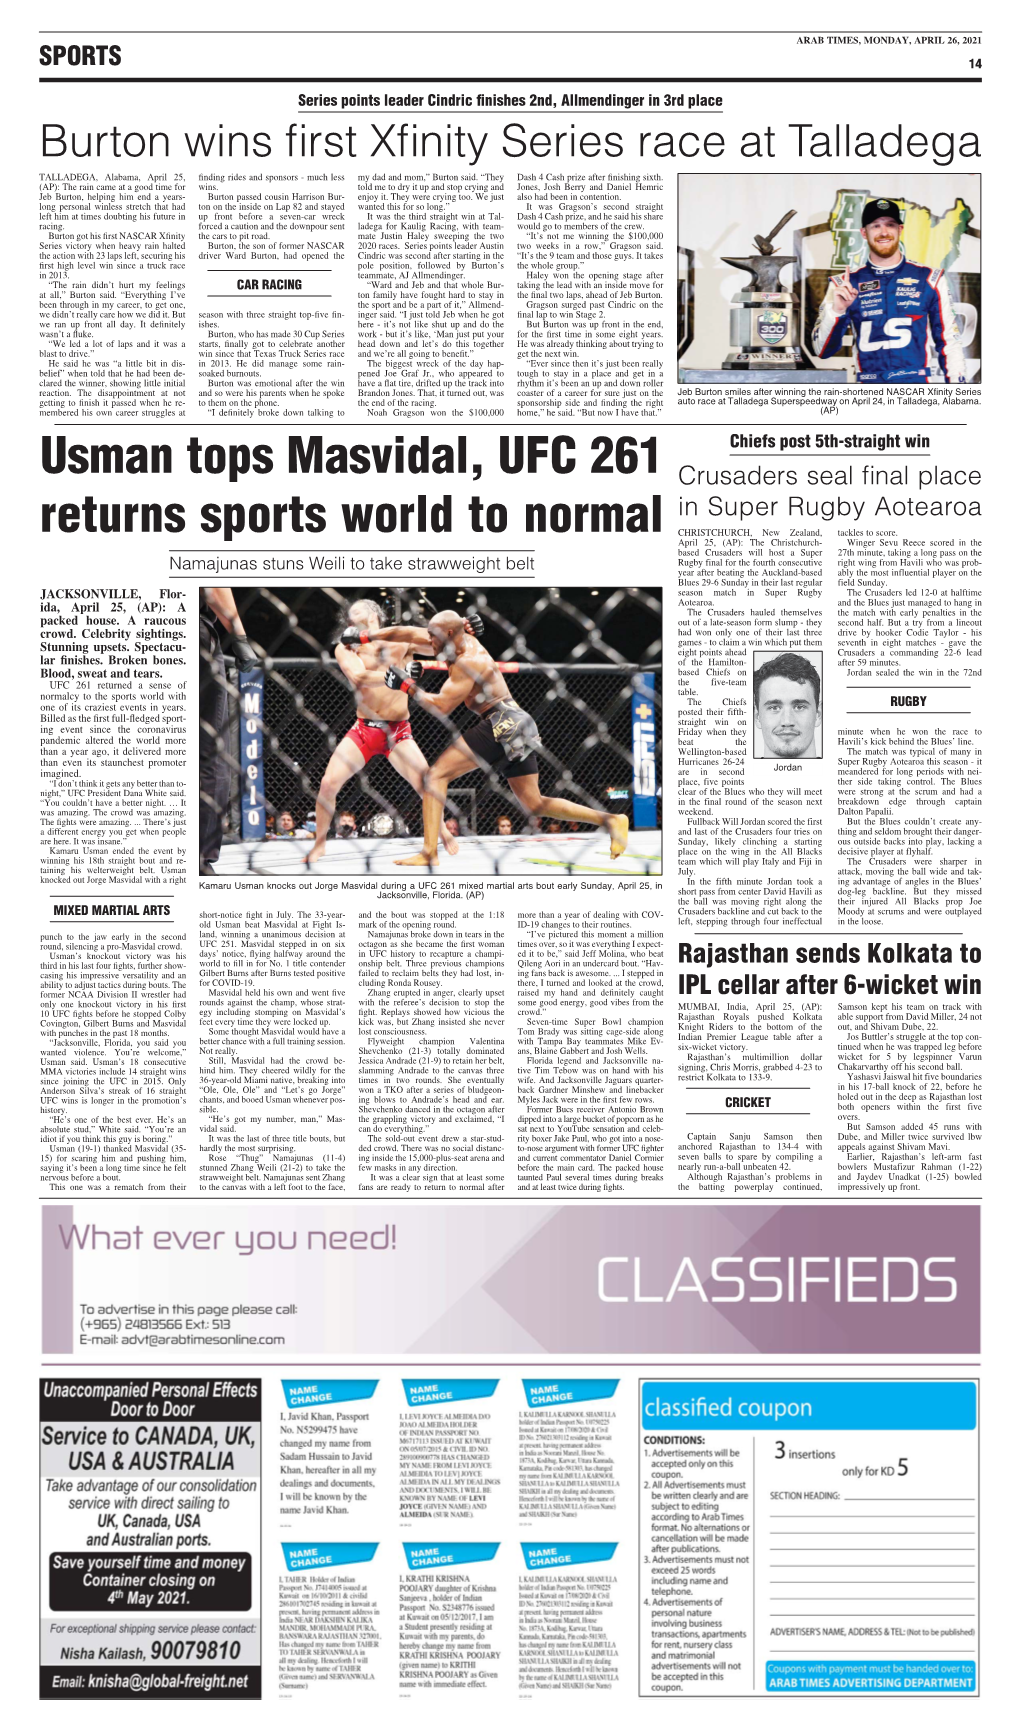 Usman Tops Masvidal, UFC 261 Returns Sports World to Normal